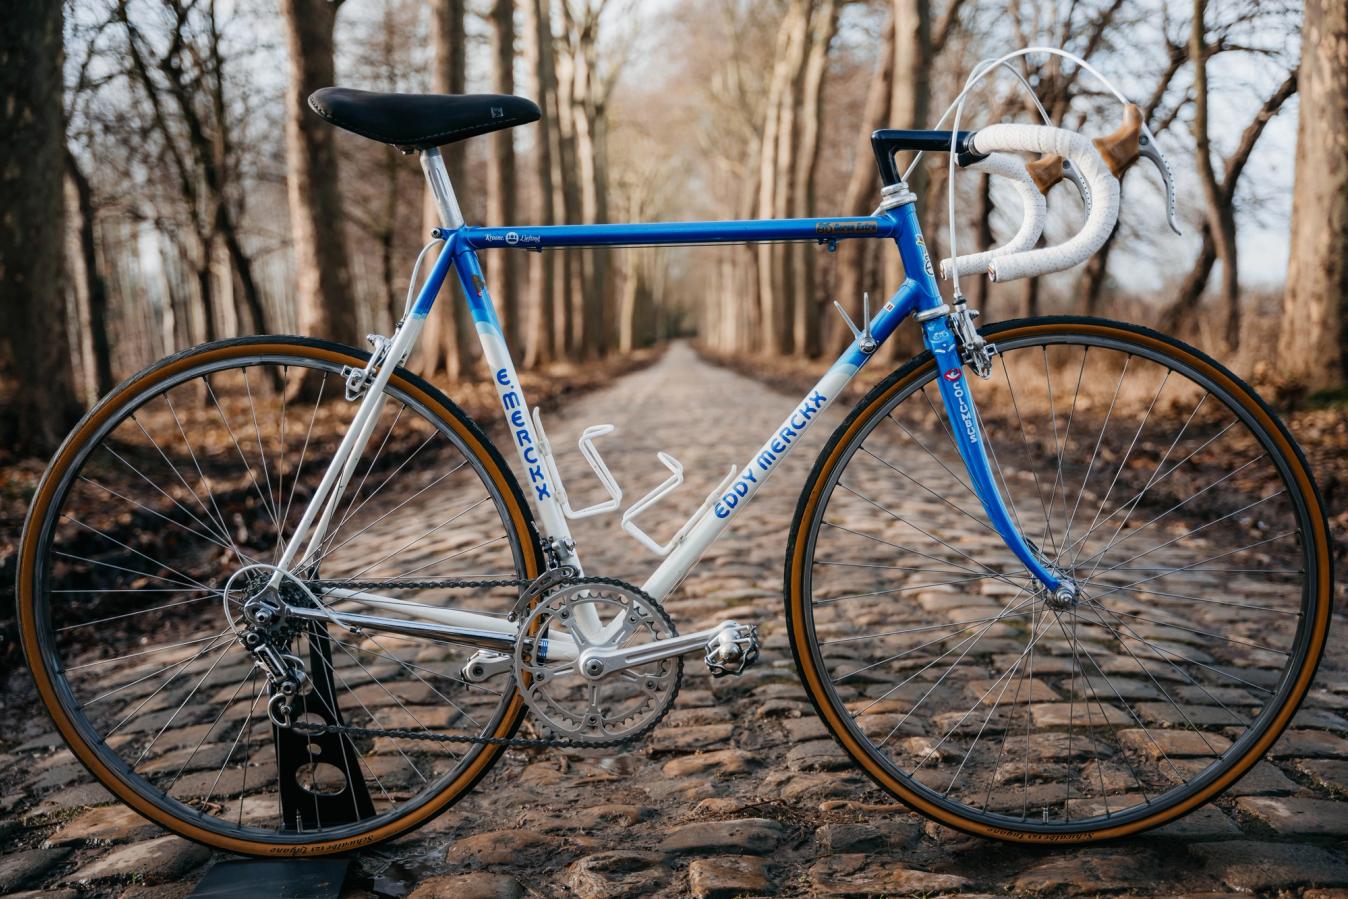 The original Eddy Merckx bike